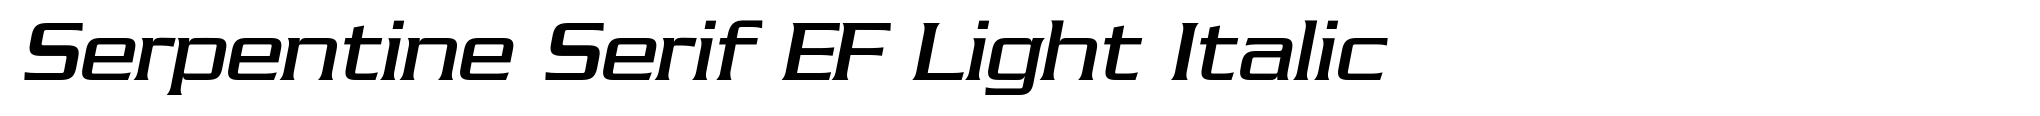 Serpentine Serif EF Light Italic image